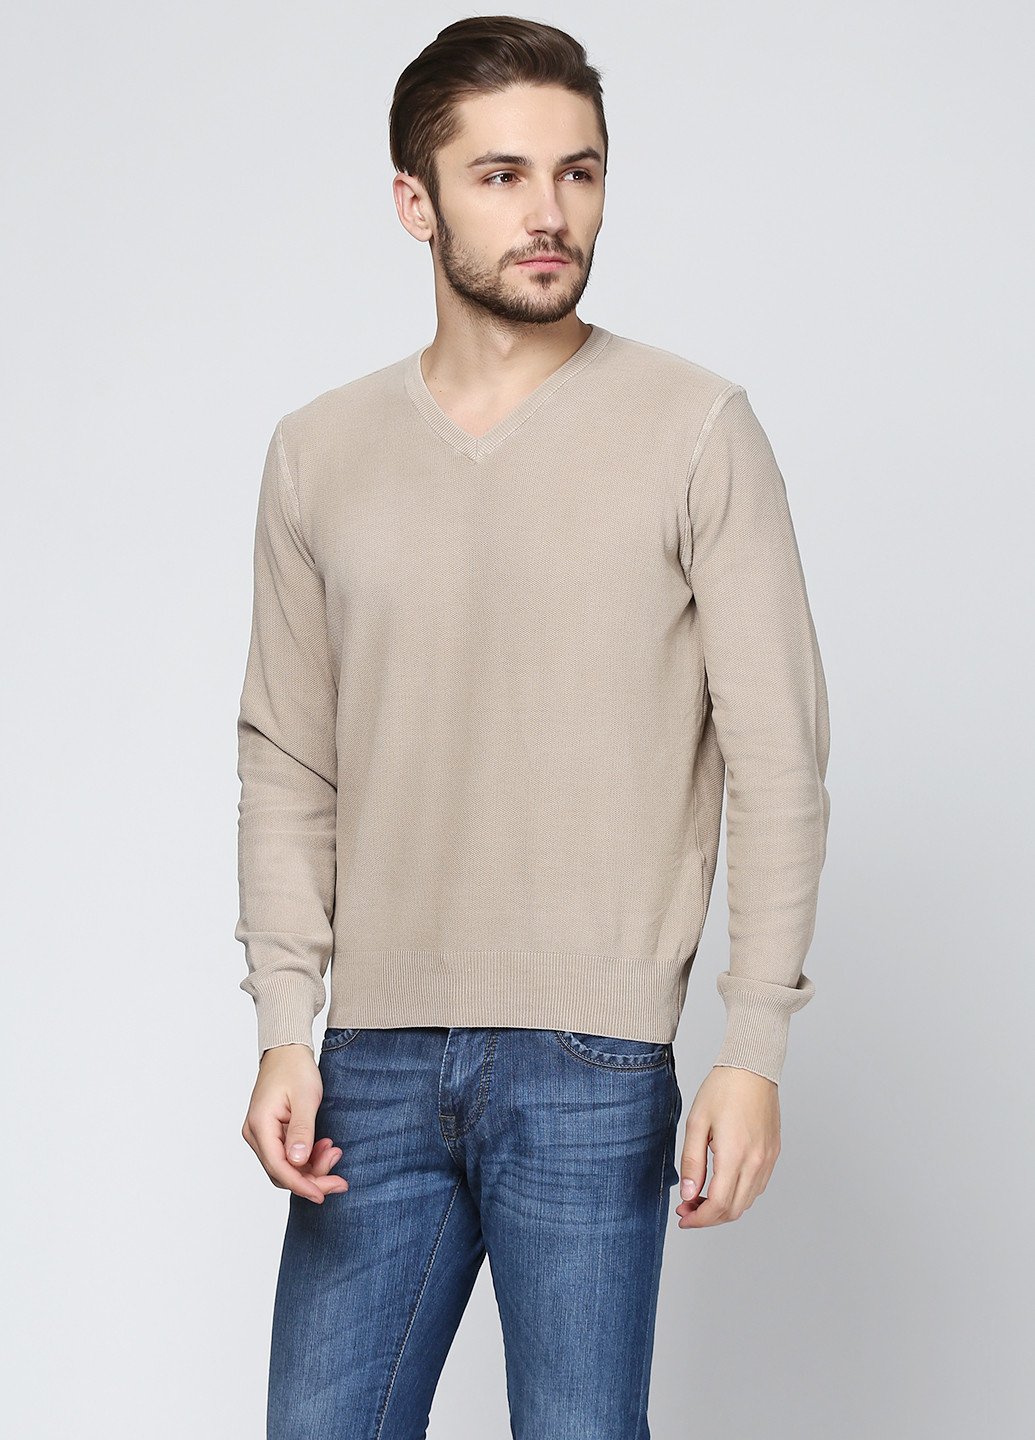 Бежевый демисезонный пуловер пуловер Cashmere